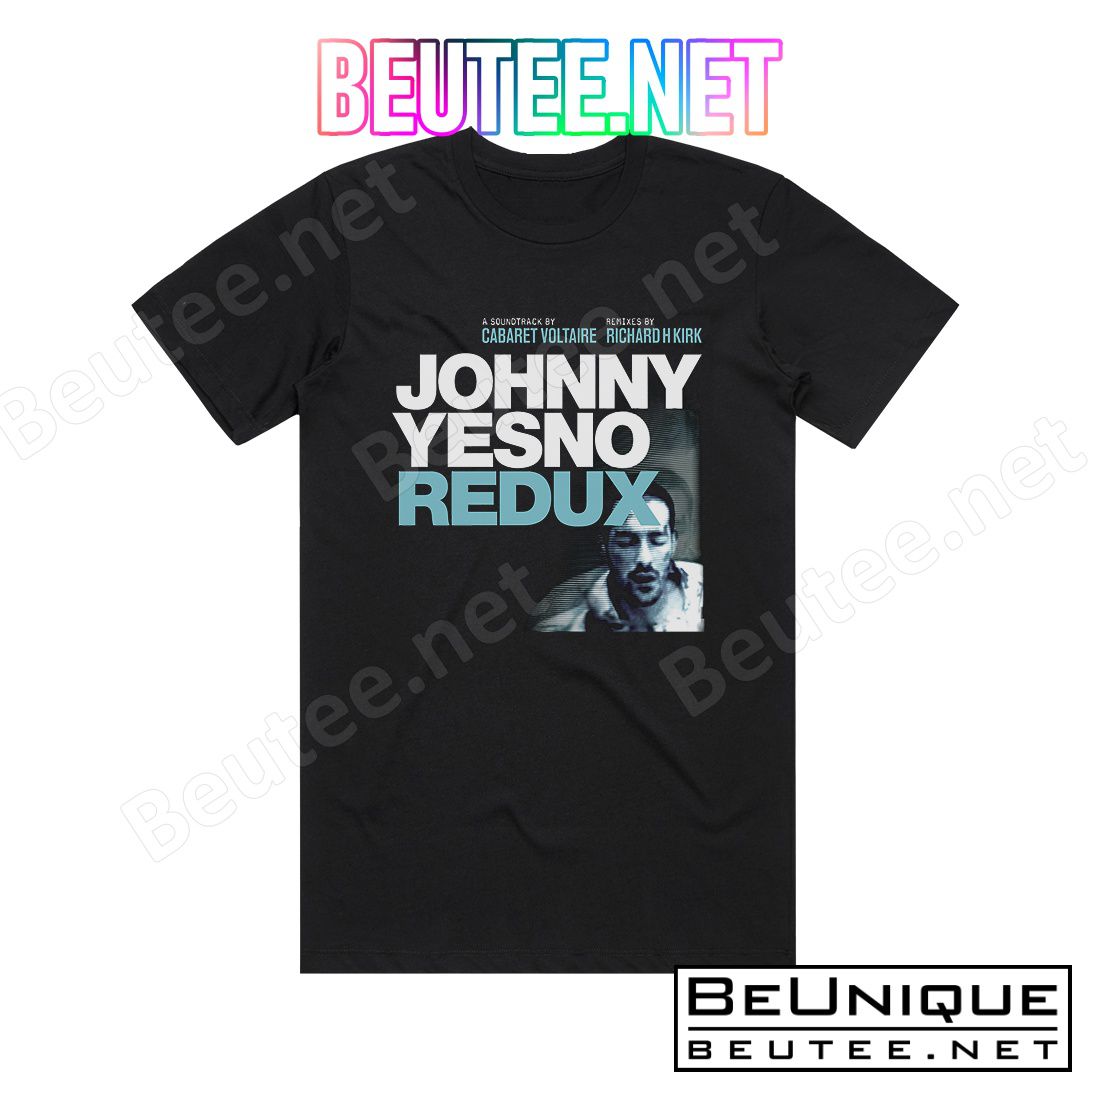 Cabaret Voltaire Johnny Yesno Redux Album Cover T-Shirt